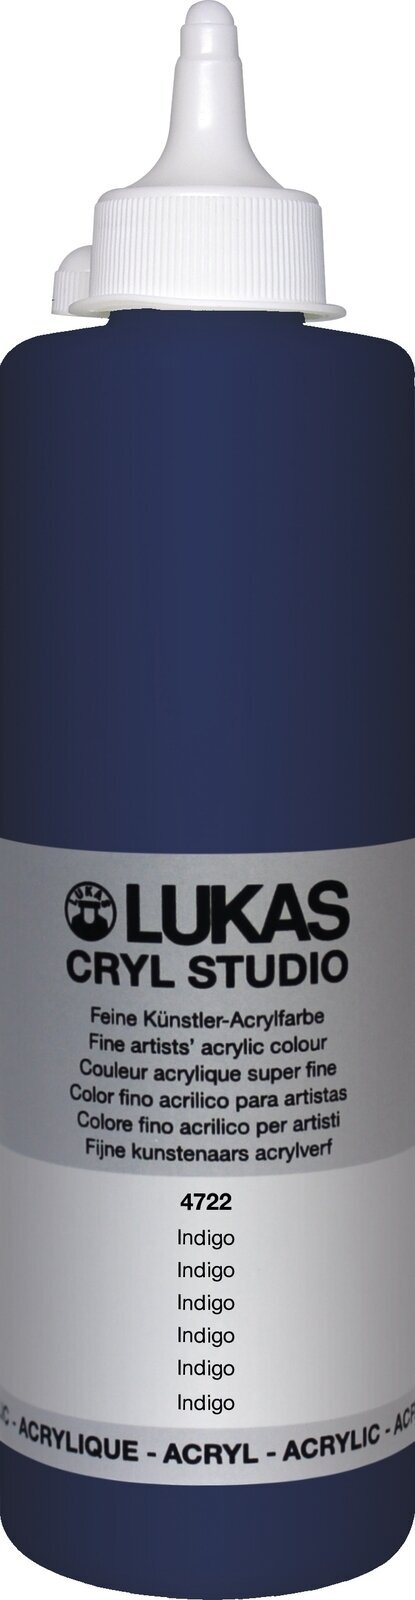 Peinture acrylique Lukas Cryl Studio Acrylic Paint Plastic Bottle Peinture acrylique Indigo 500 ml 1 pc